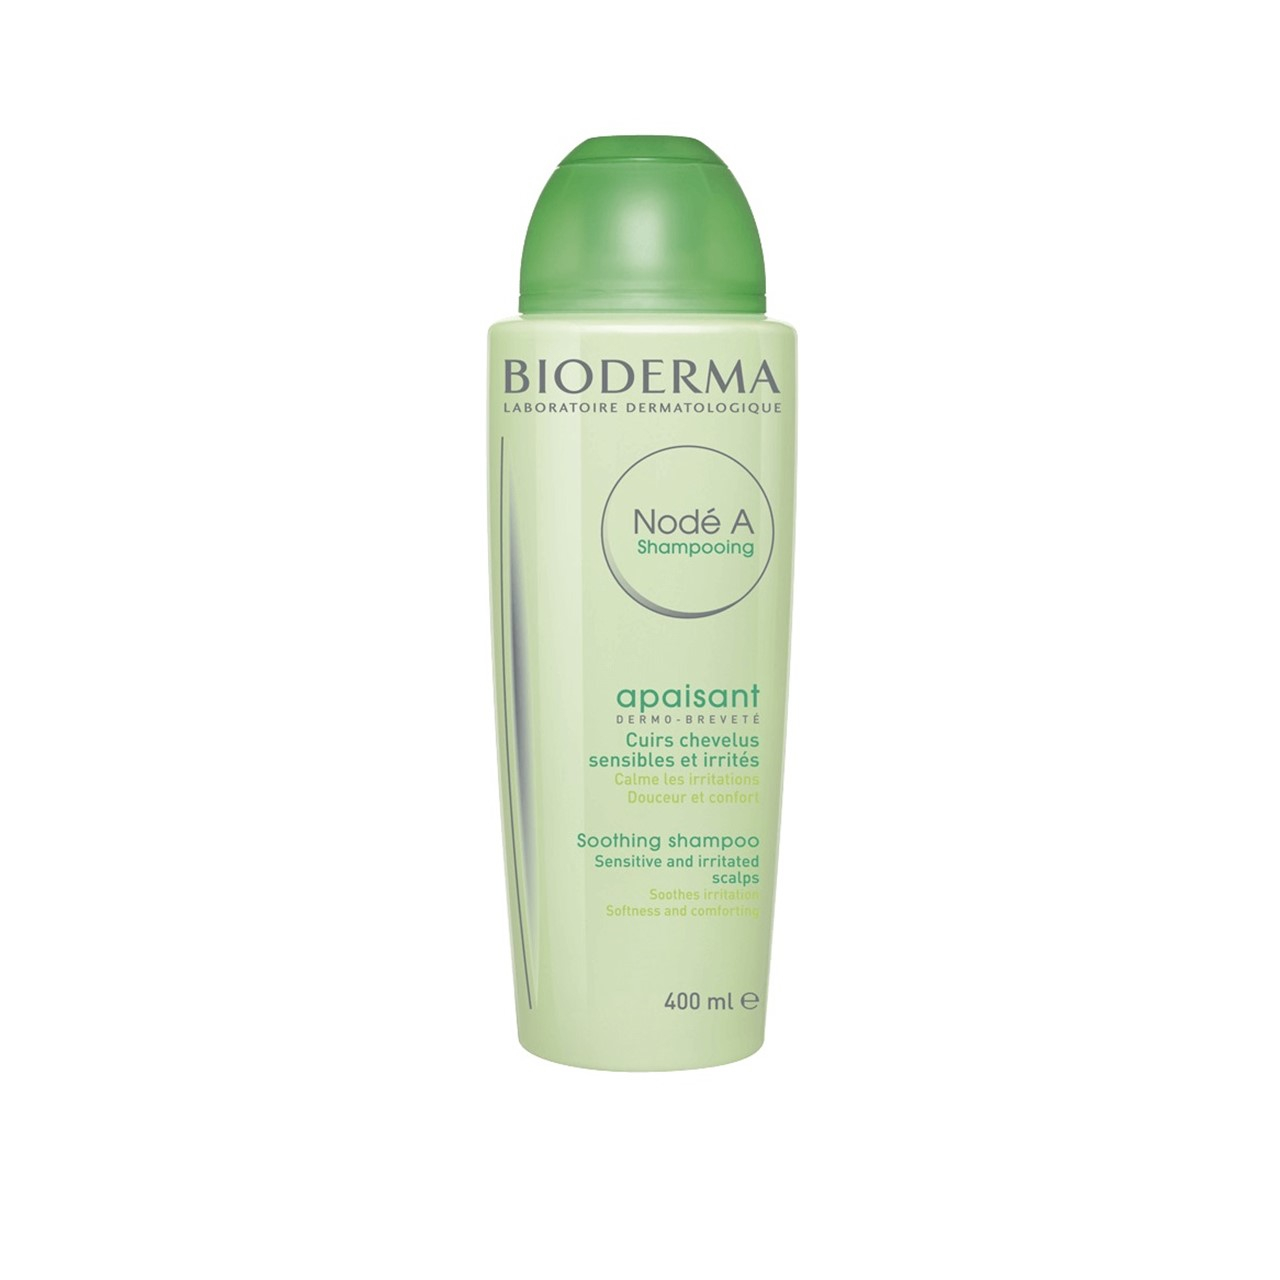 Bioderma Nodé A Shampooing Soothing Shampoo Irritated Scalps 400ml (13.53fl oz)